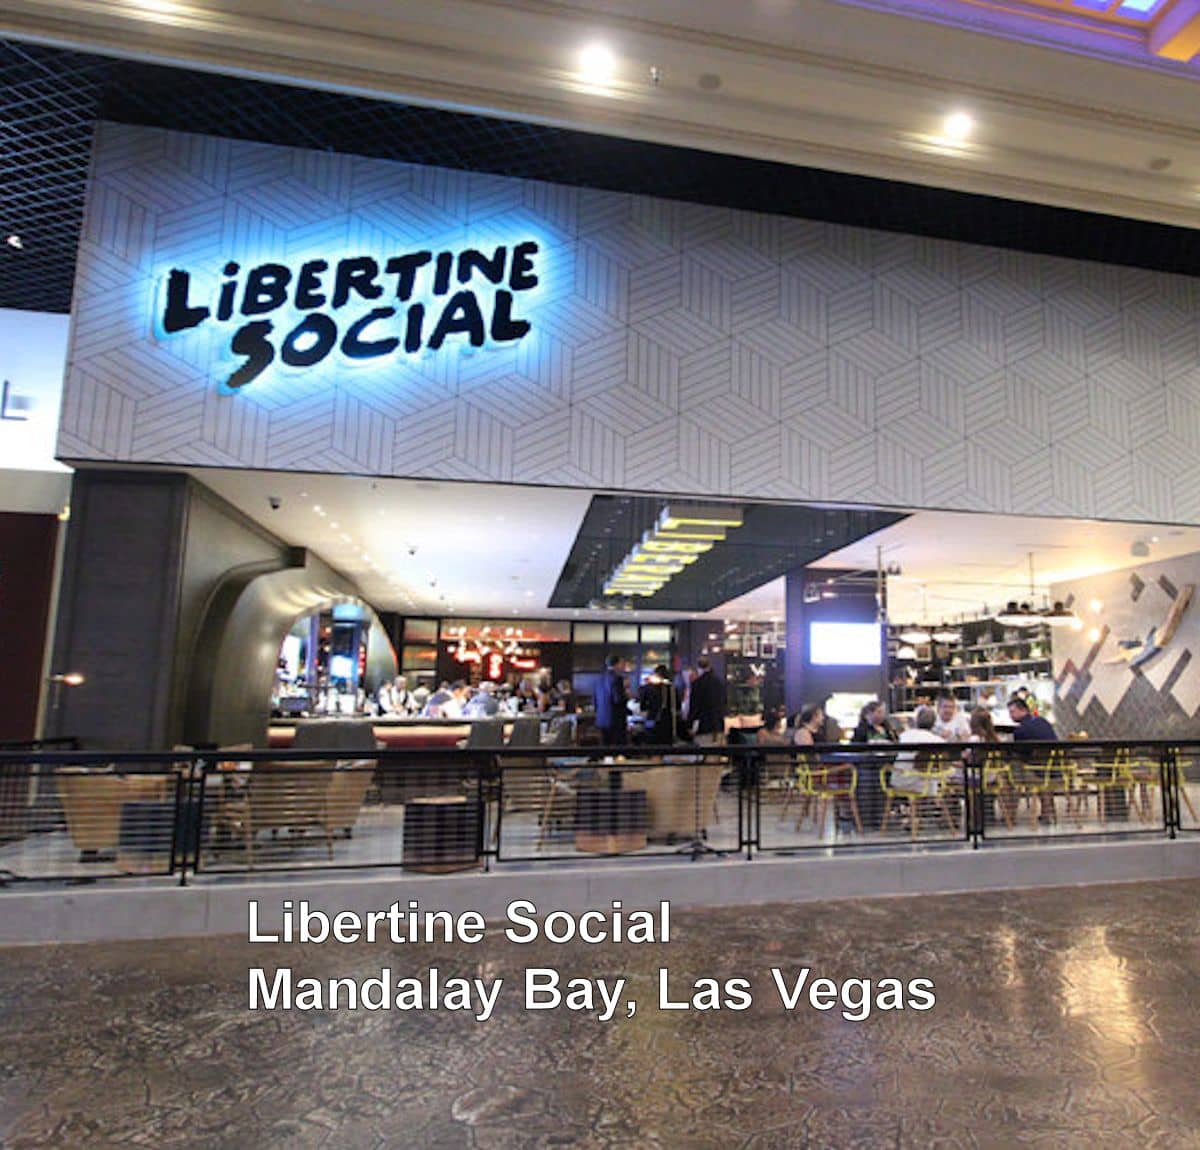 libertine social website